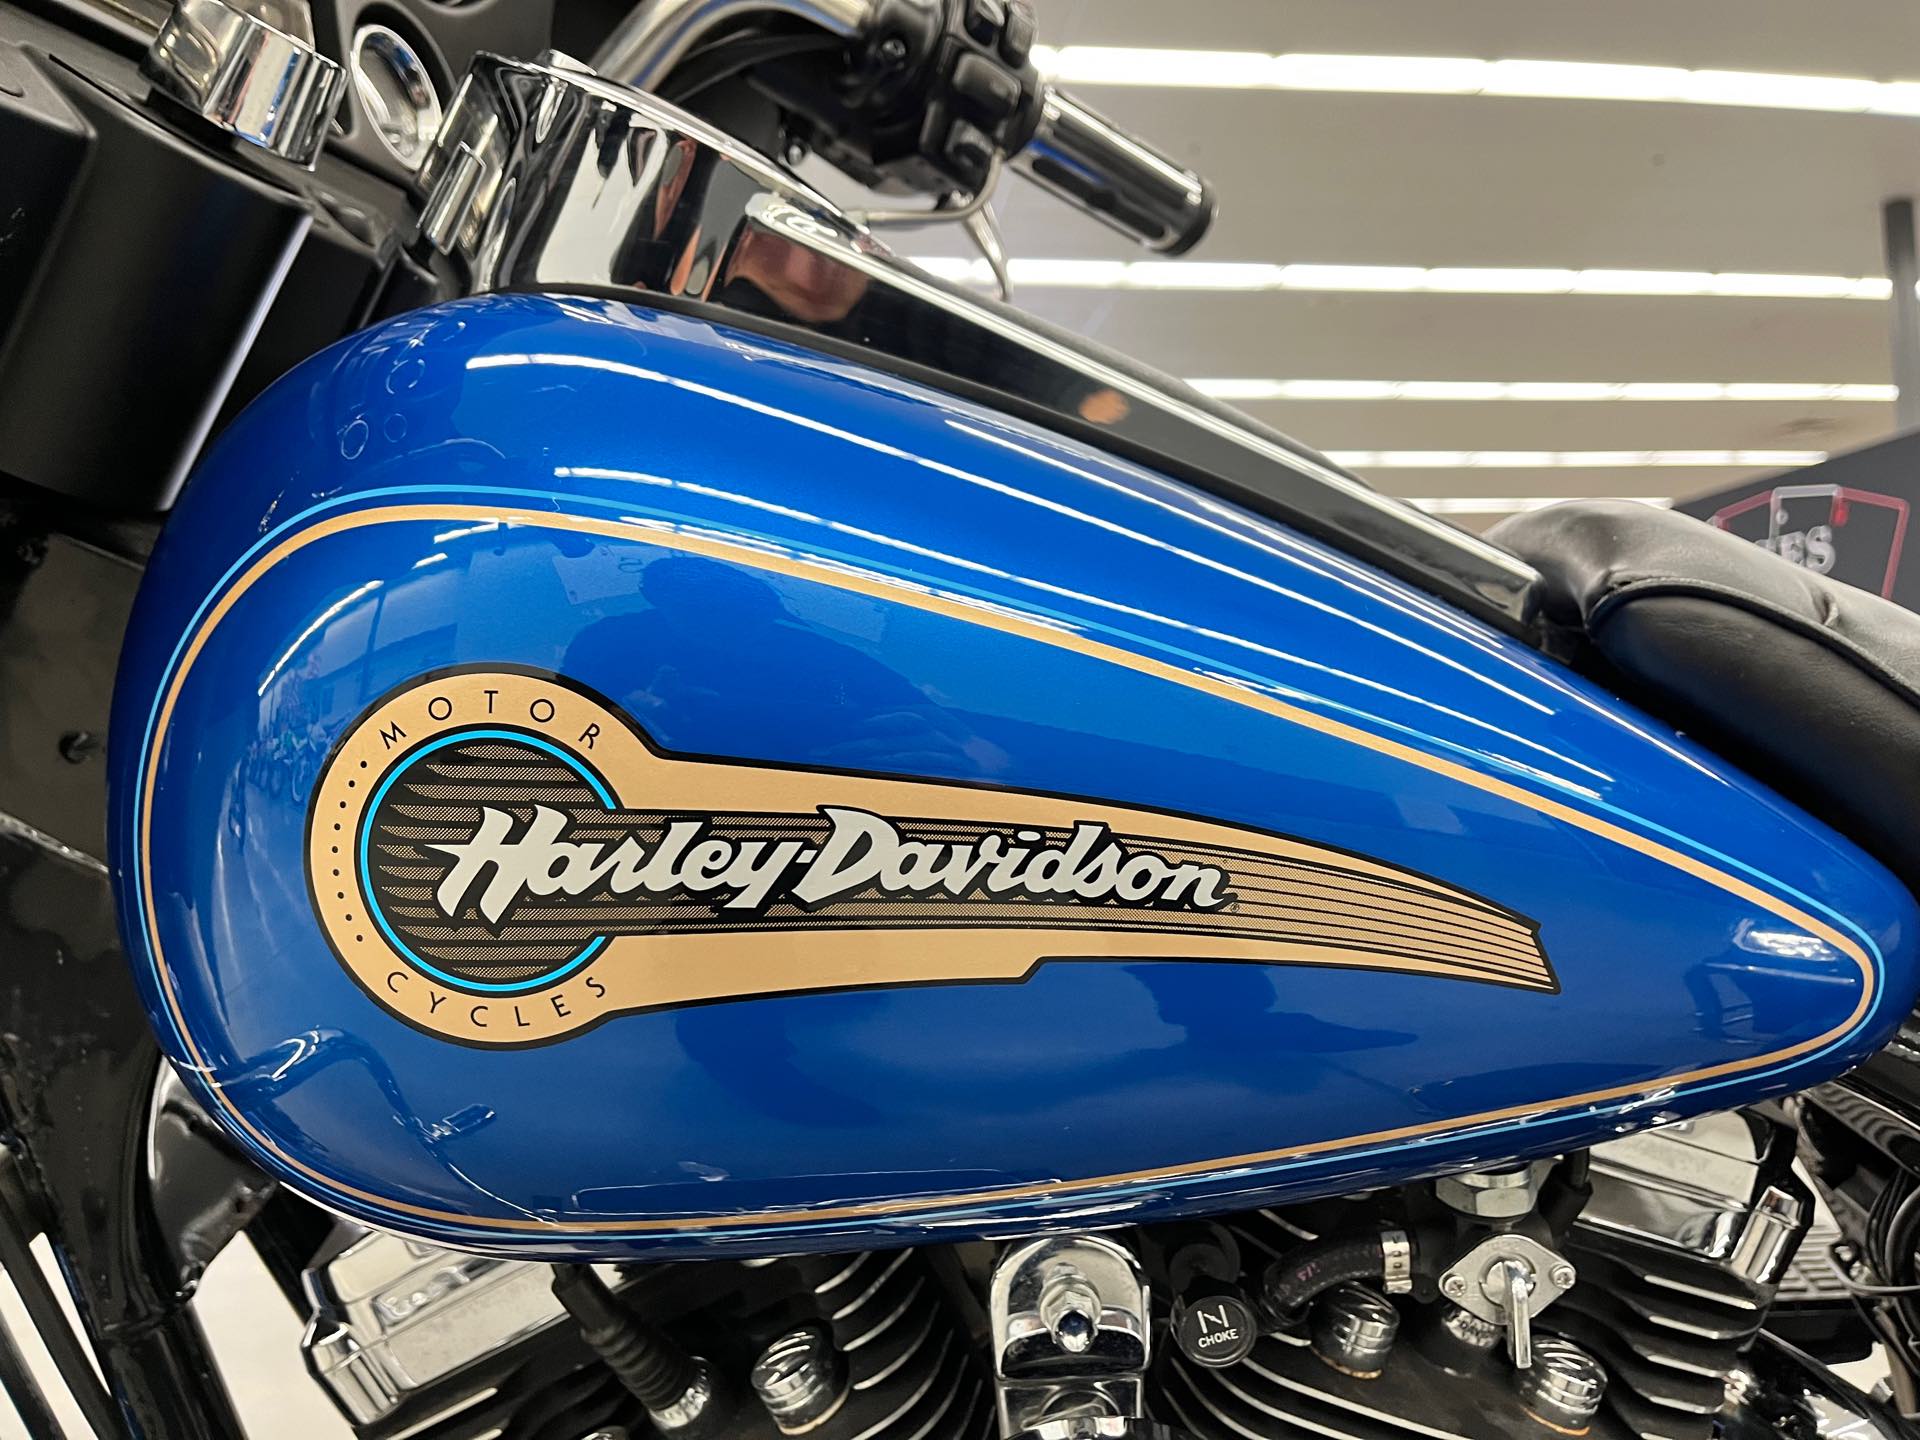 1996 Harley-Davidson FLHTCU at Aces Motorcycles - Denver